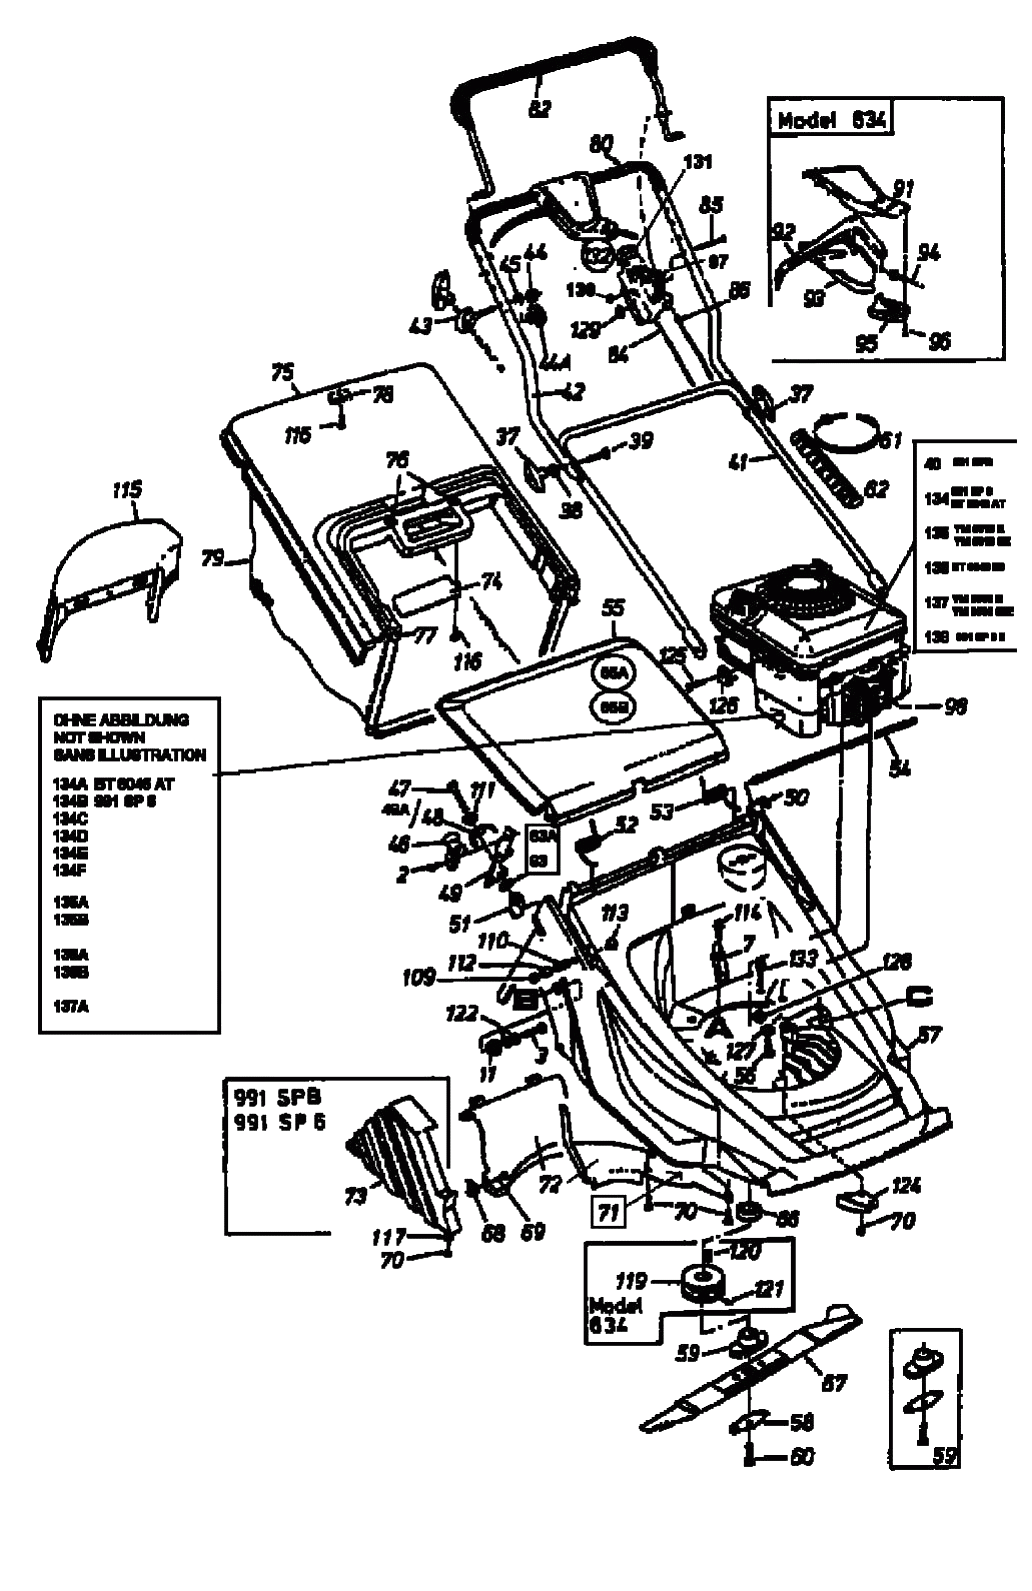 MTD Артикул 12A-649Y678 (год выпуска 1999). Основная деталировка